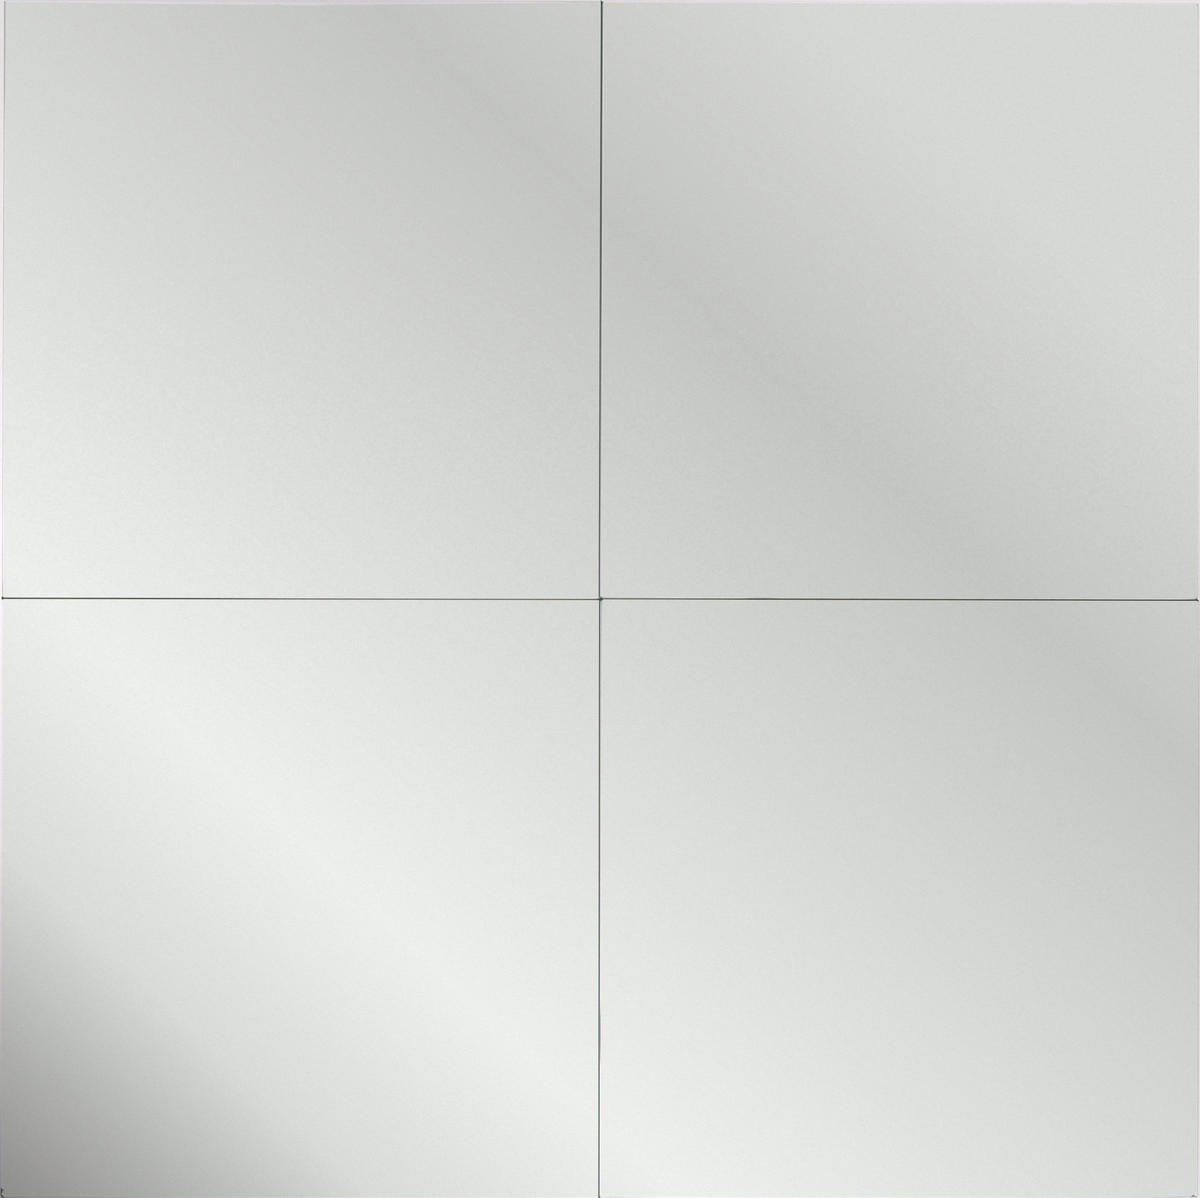 FALI TÜKÖR 30/30/0,3 cm    - Ezüst, Konventionell (30/30/0,3cm) - Boxxx